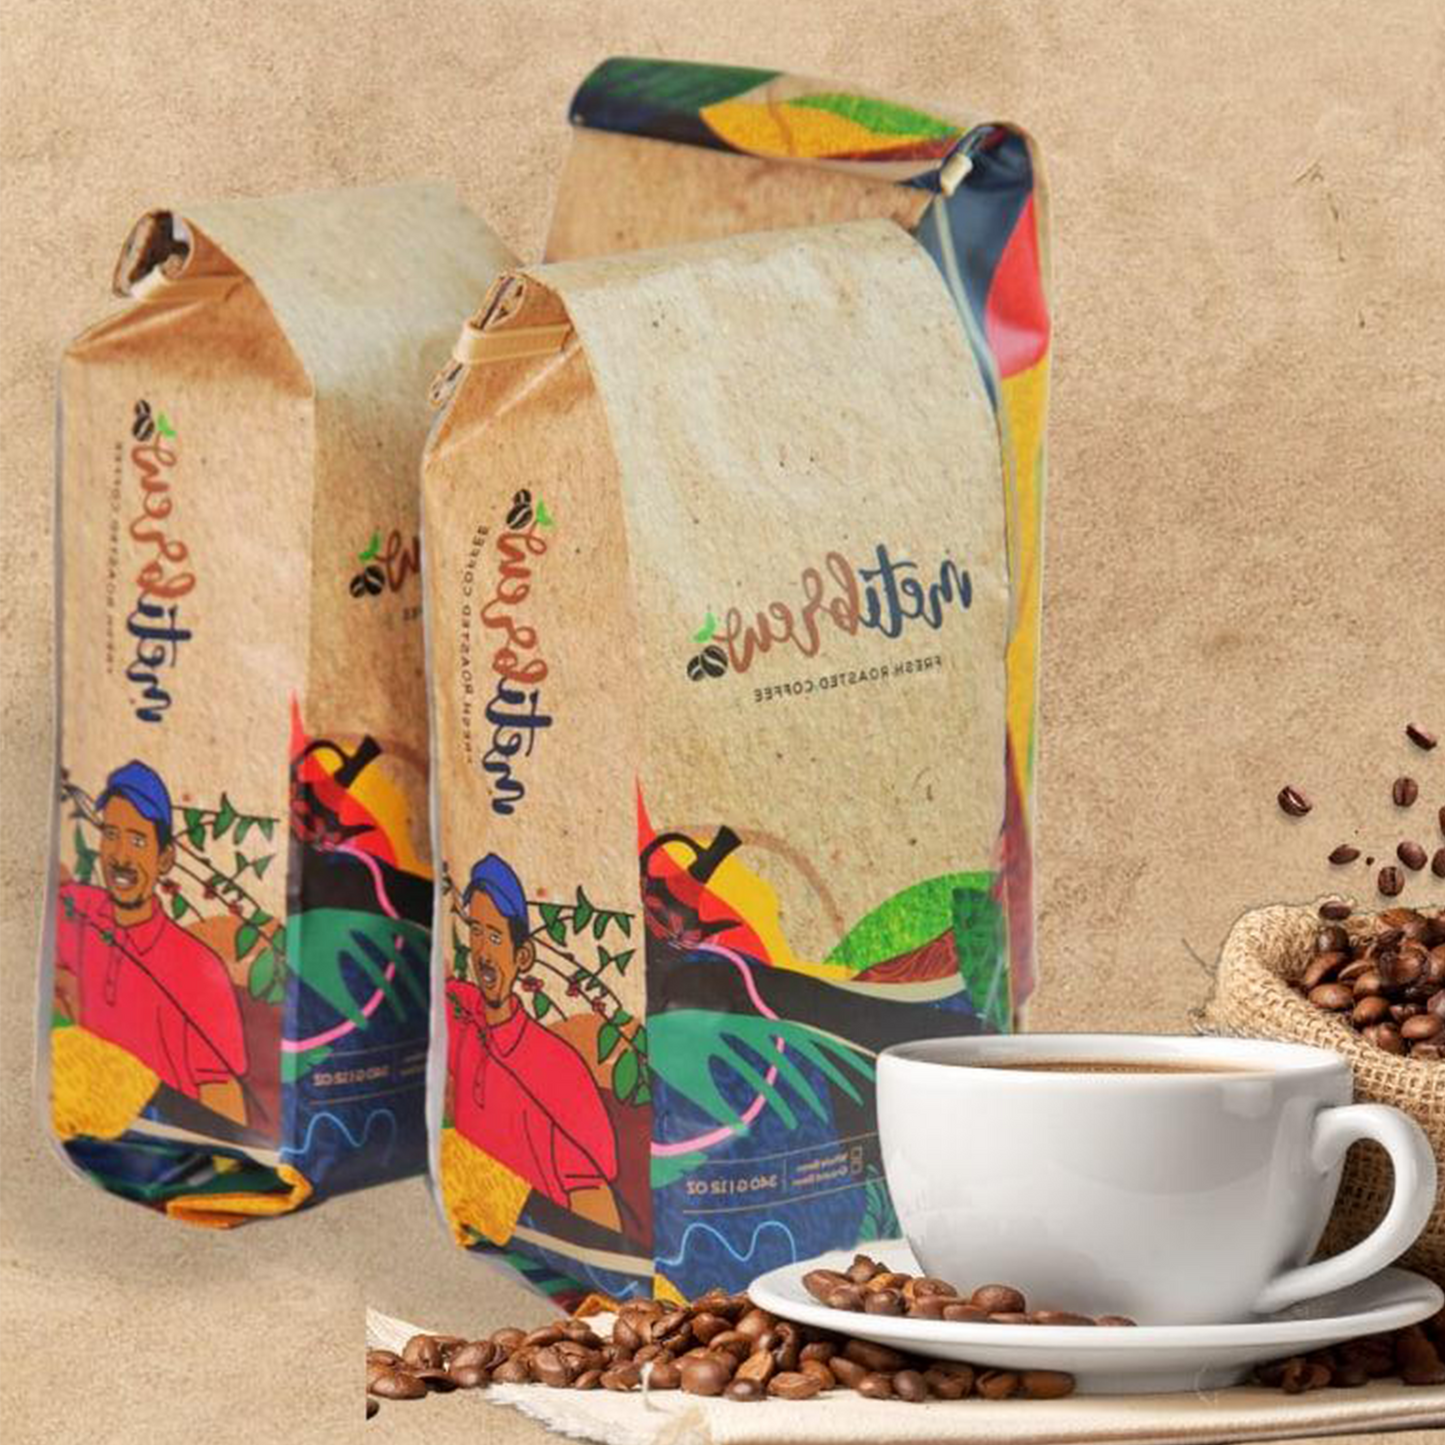 Yirgacheffe 3 bags Coffee - Subscribe